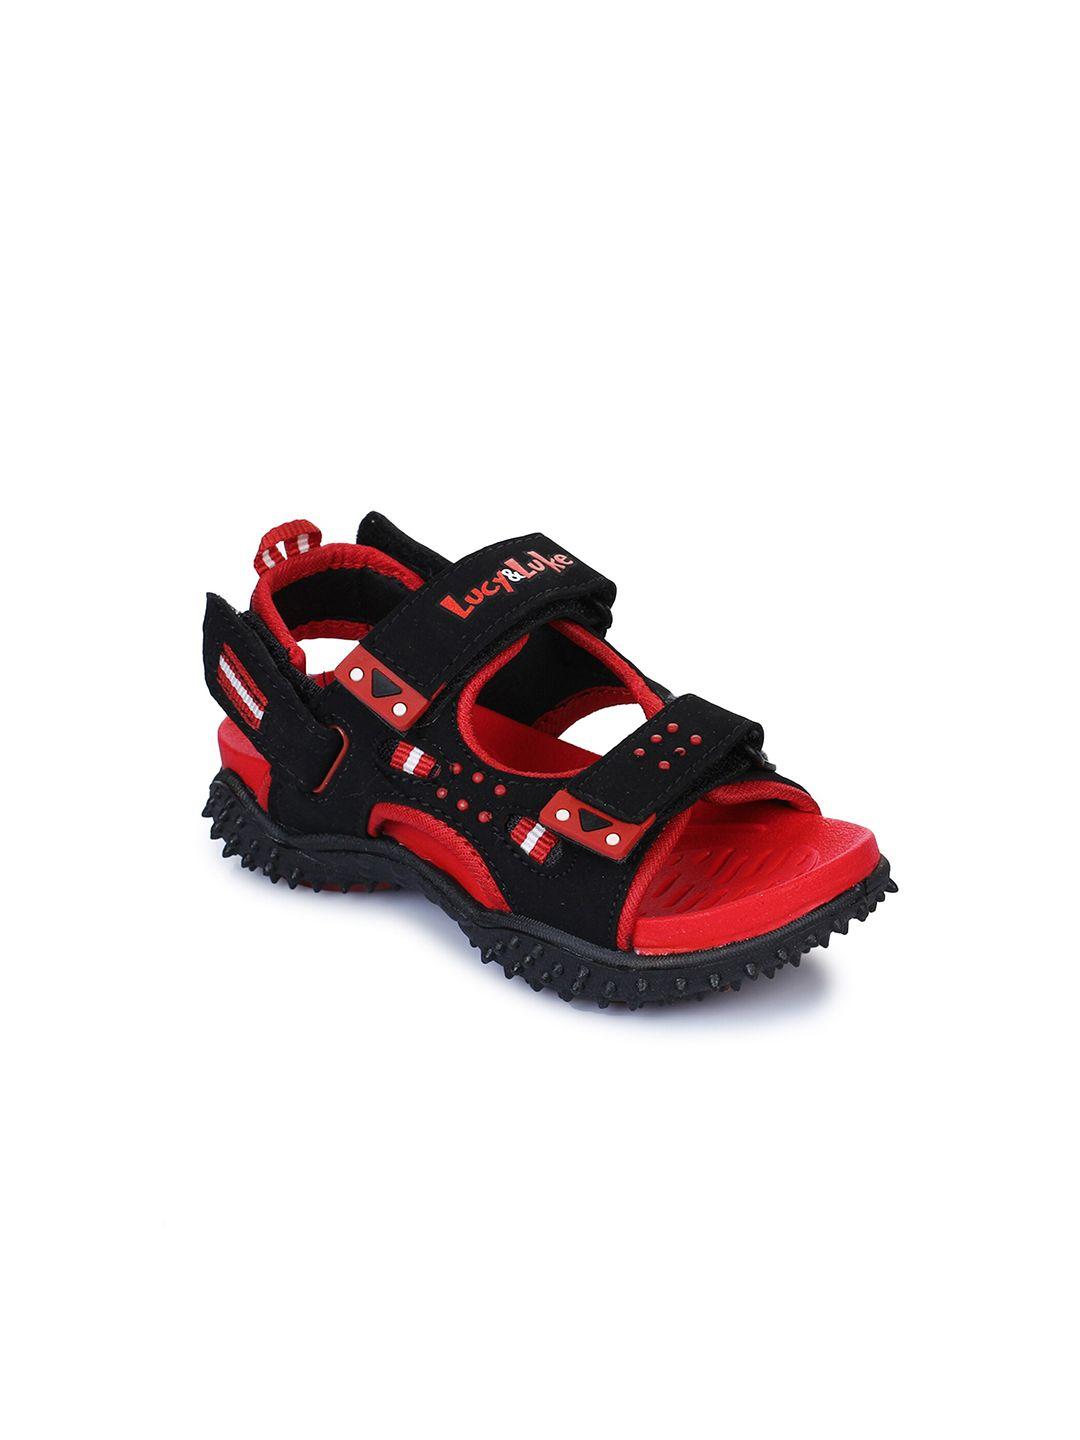 liberty-unisex-kids-black-&-red-comfort-sandals